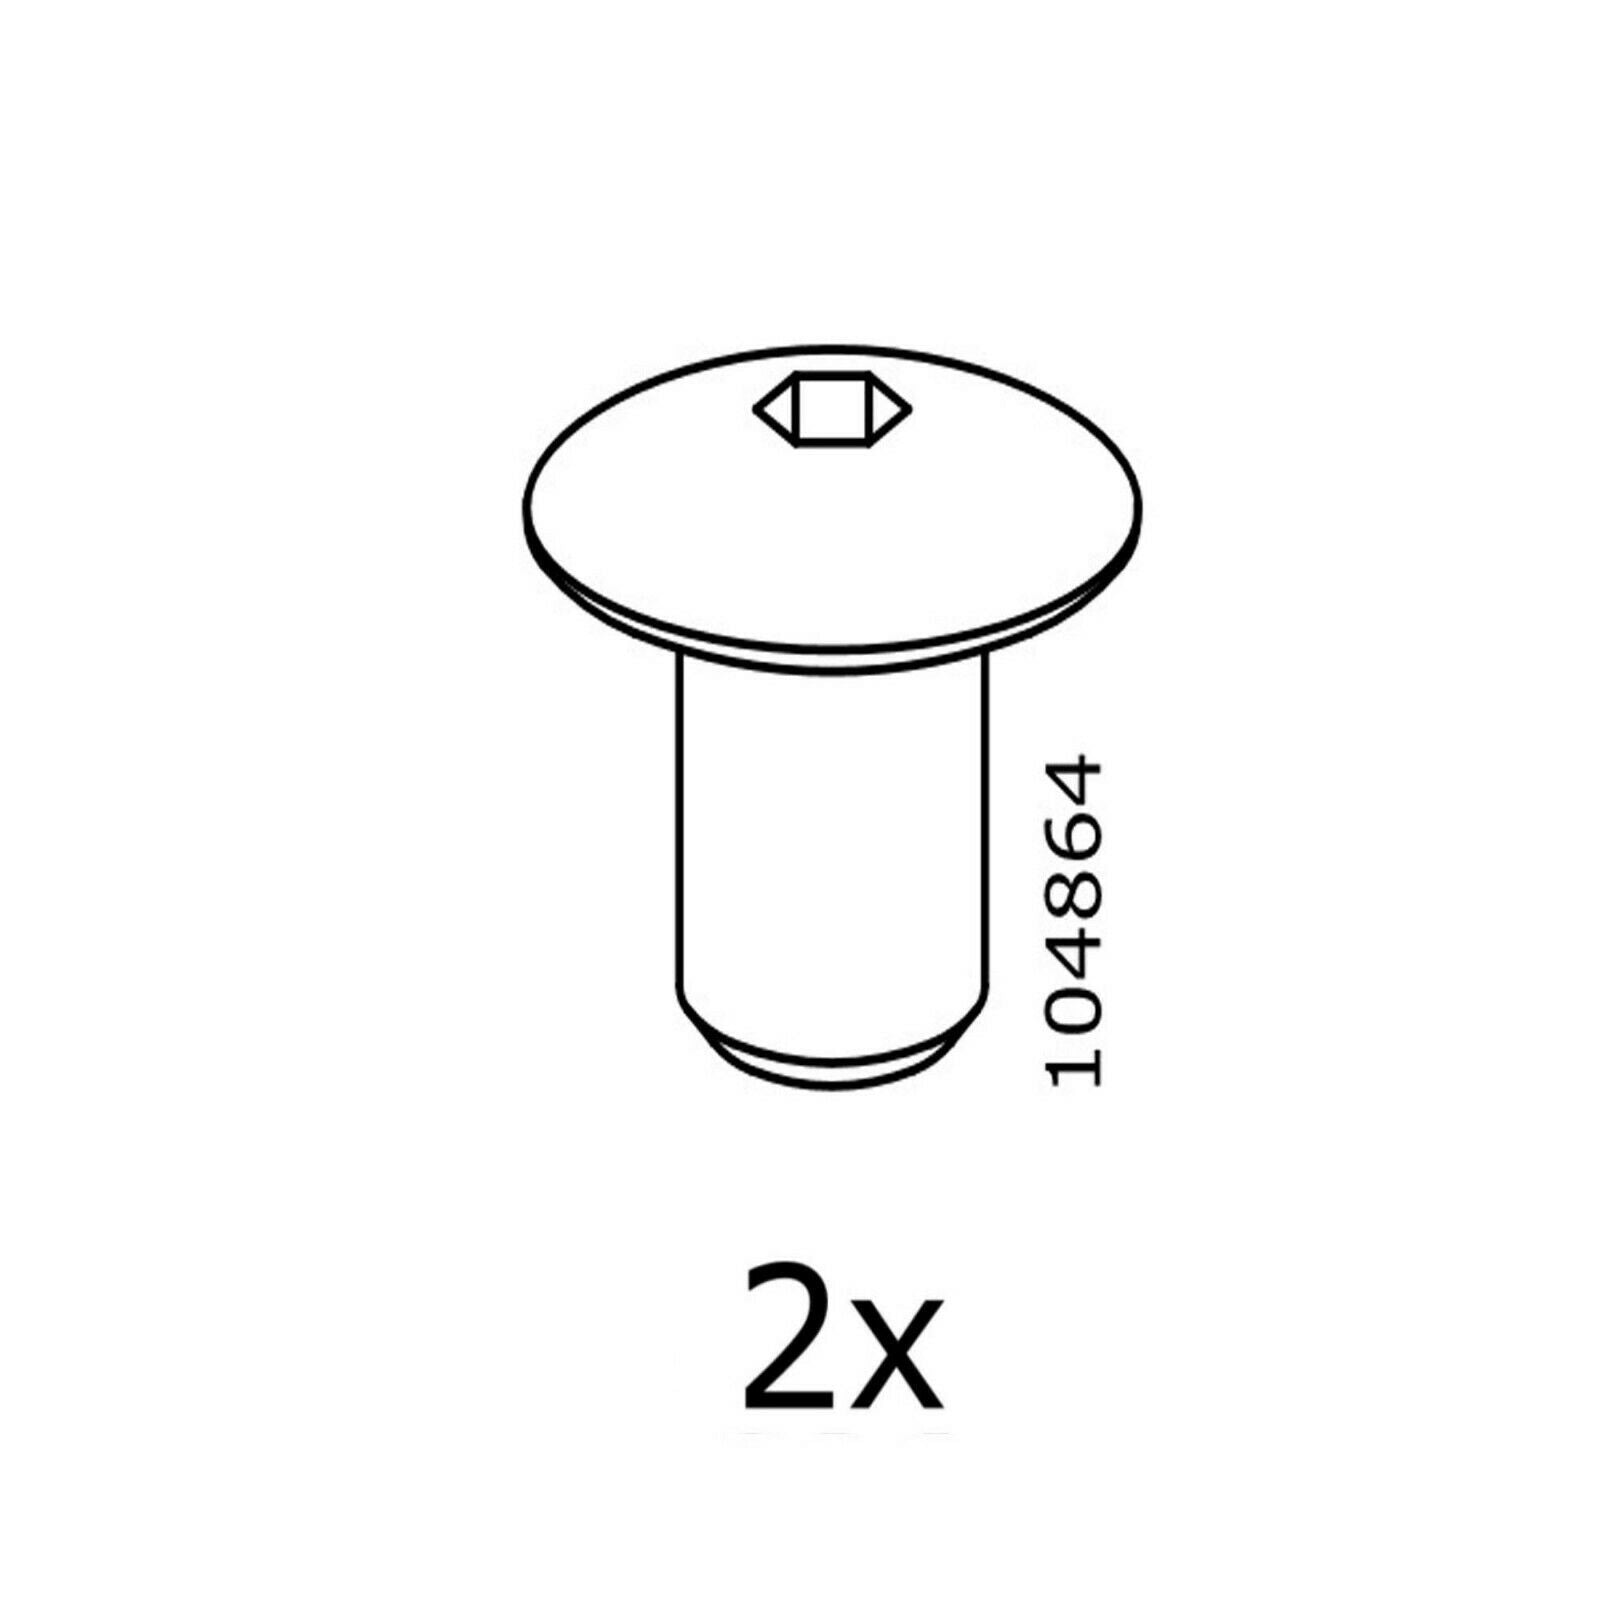 IKEA Nut Part # 104864 (2 Packs) Metric Sleeves Furniture Hardware Fittings